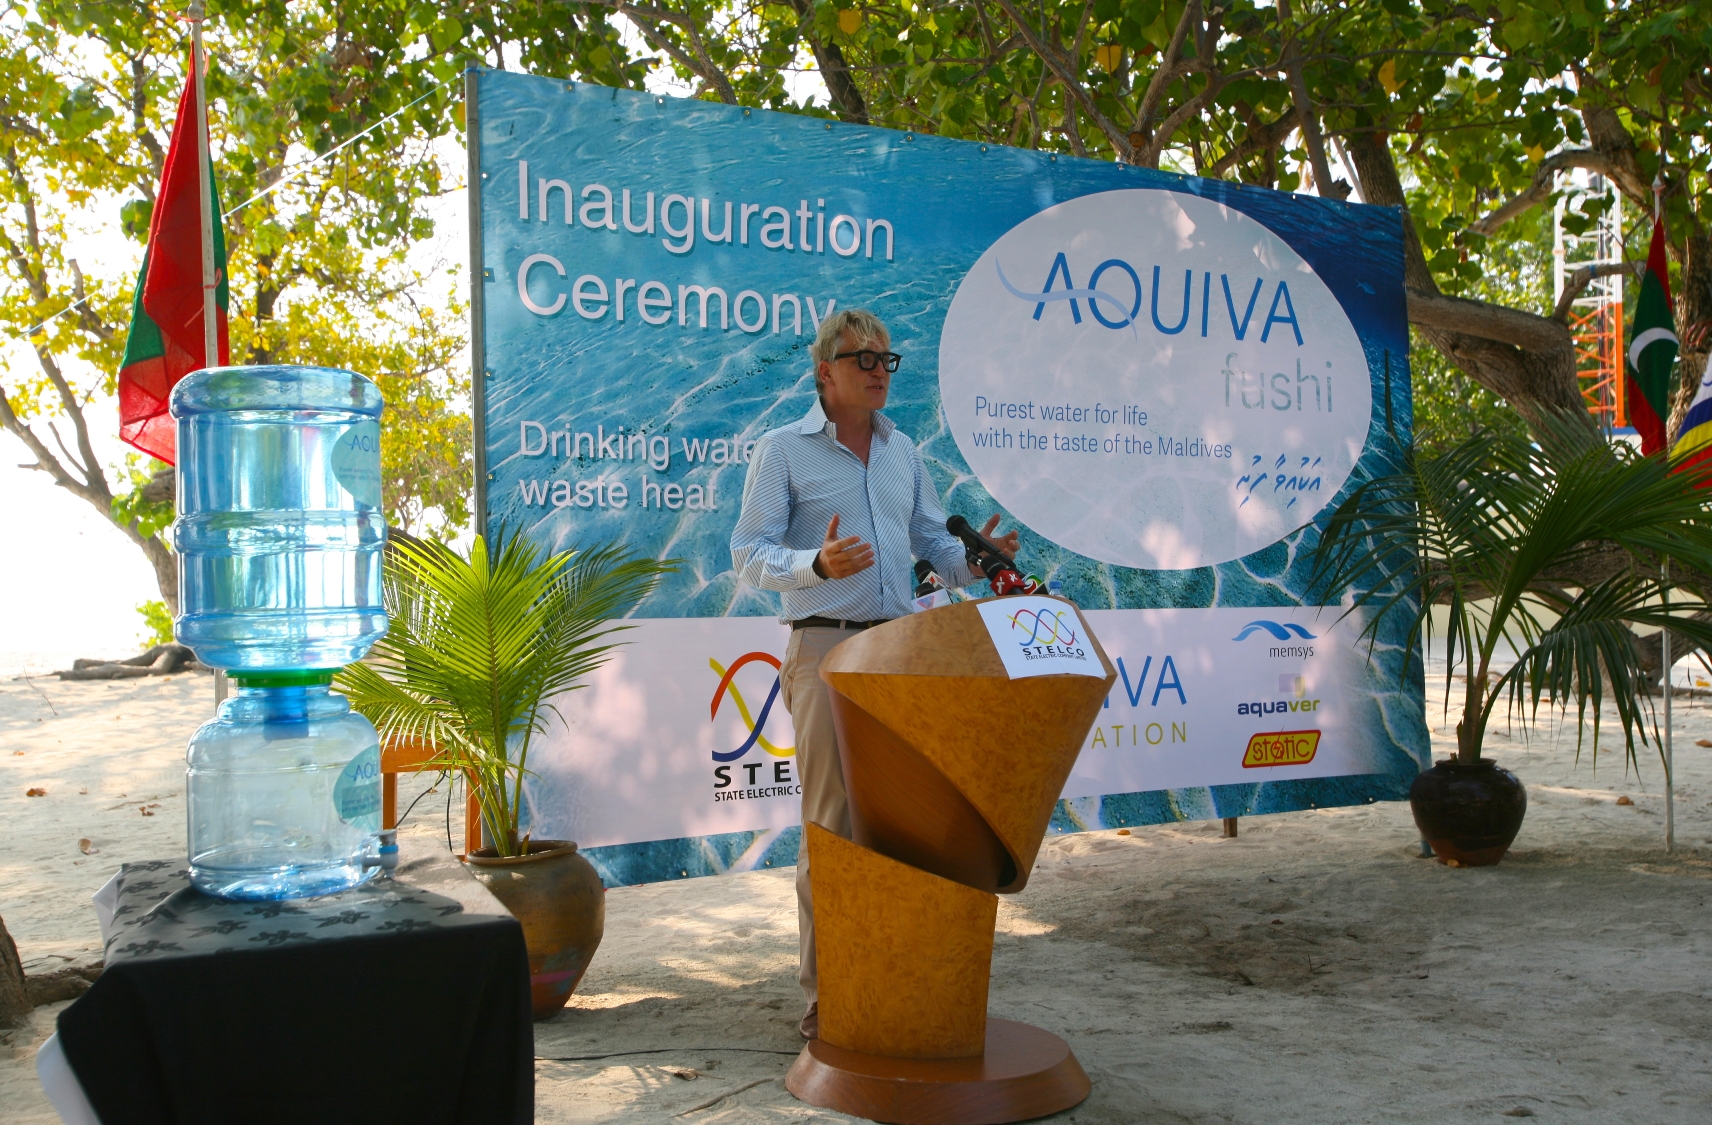 Aquiva Foundation CEO Presents Remarks